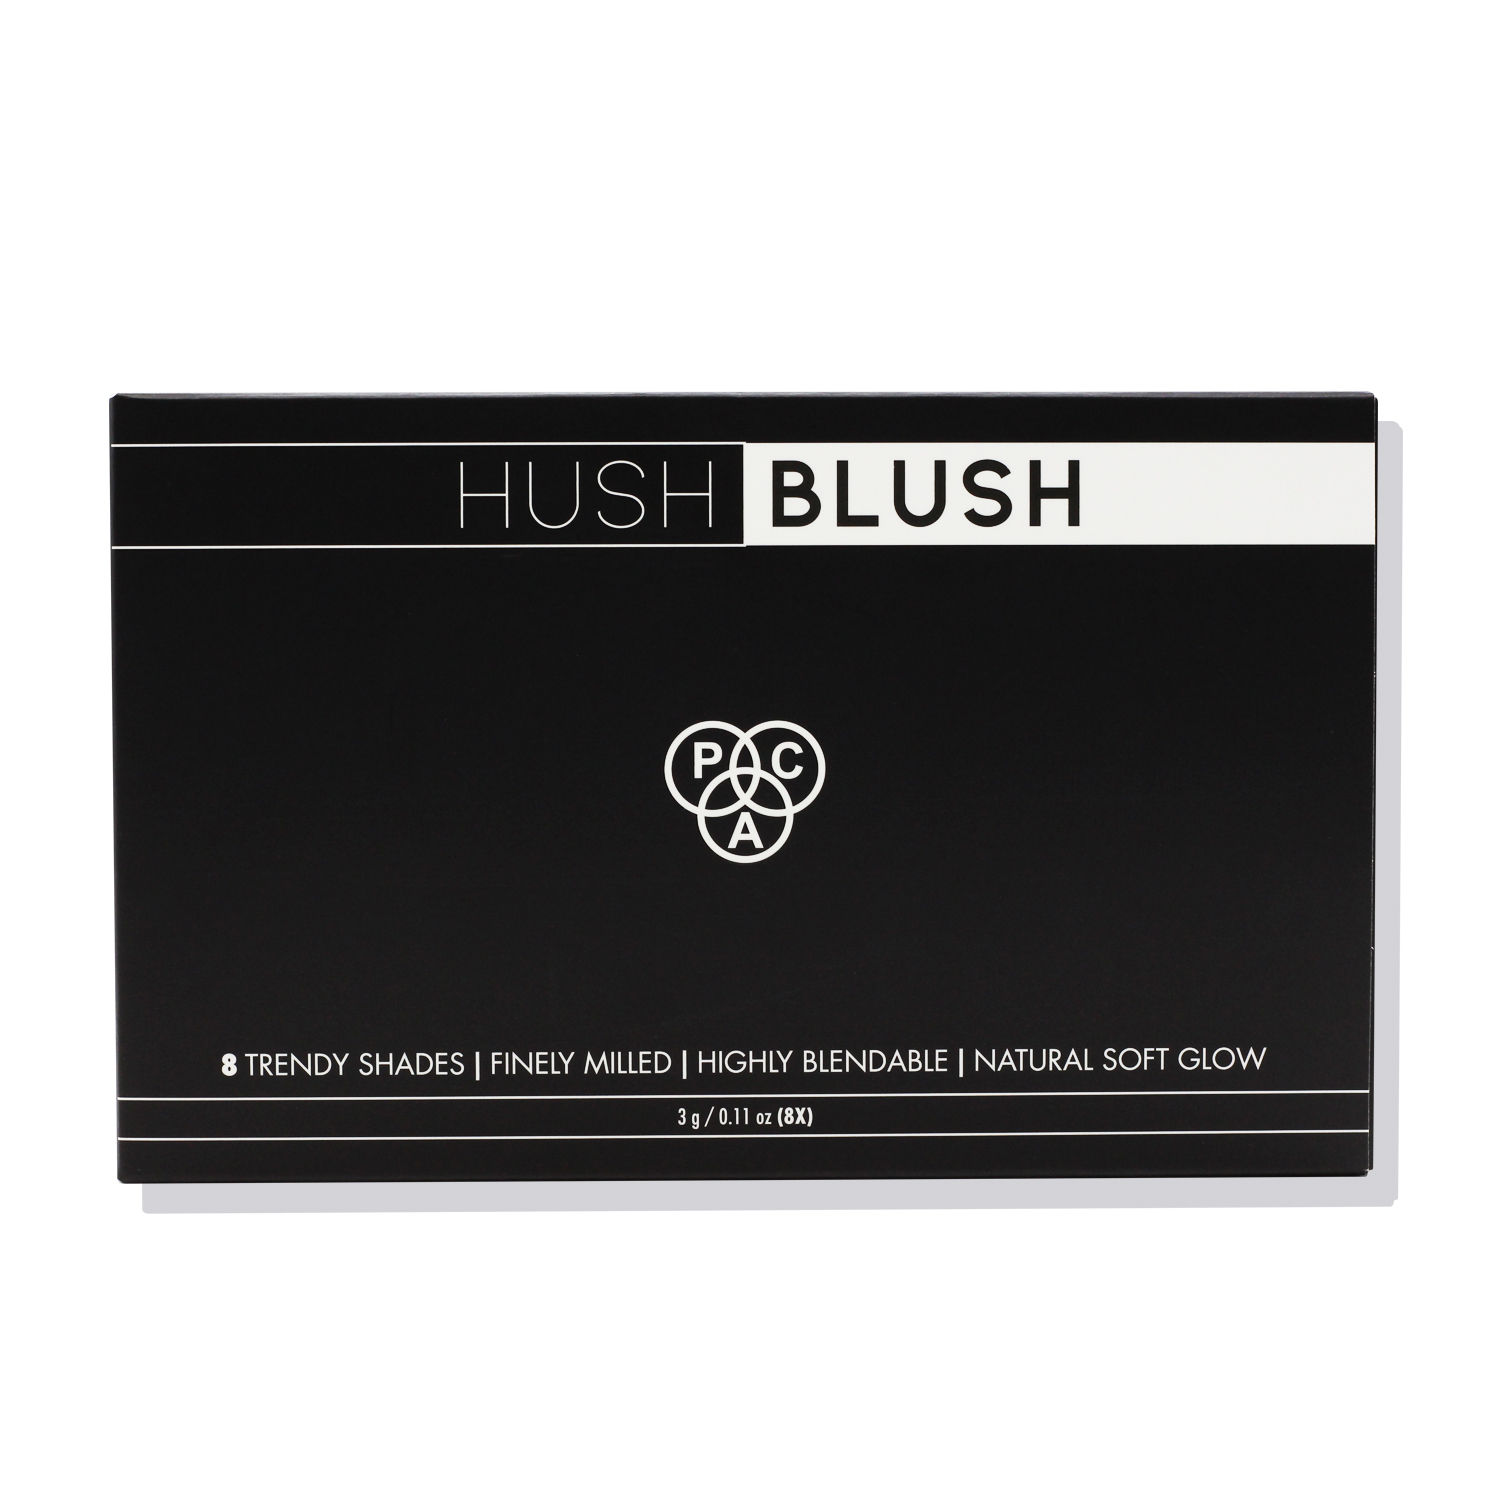 hush hush blush blush